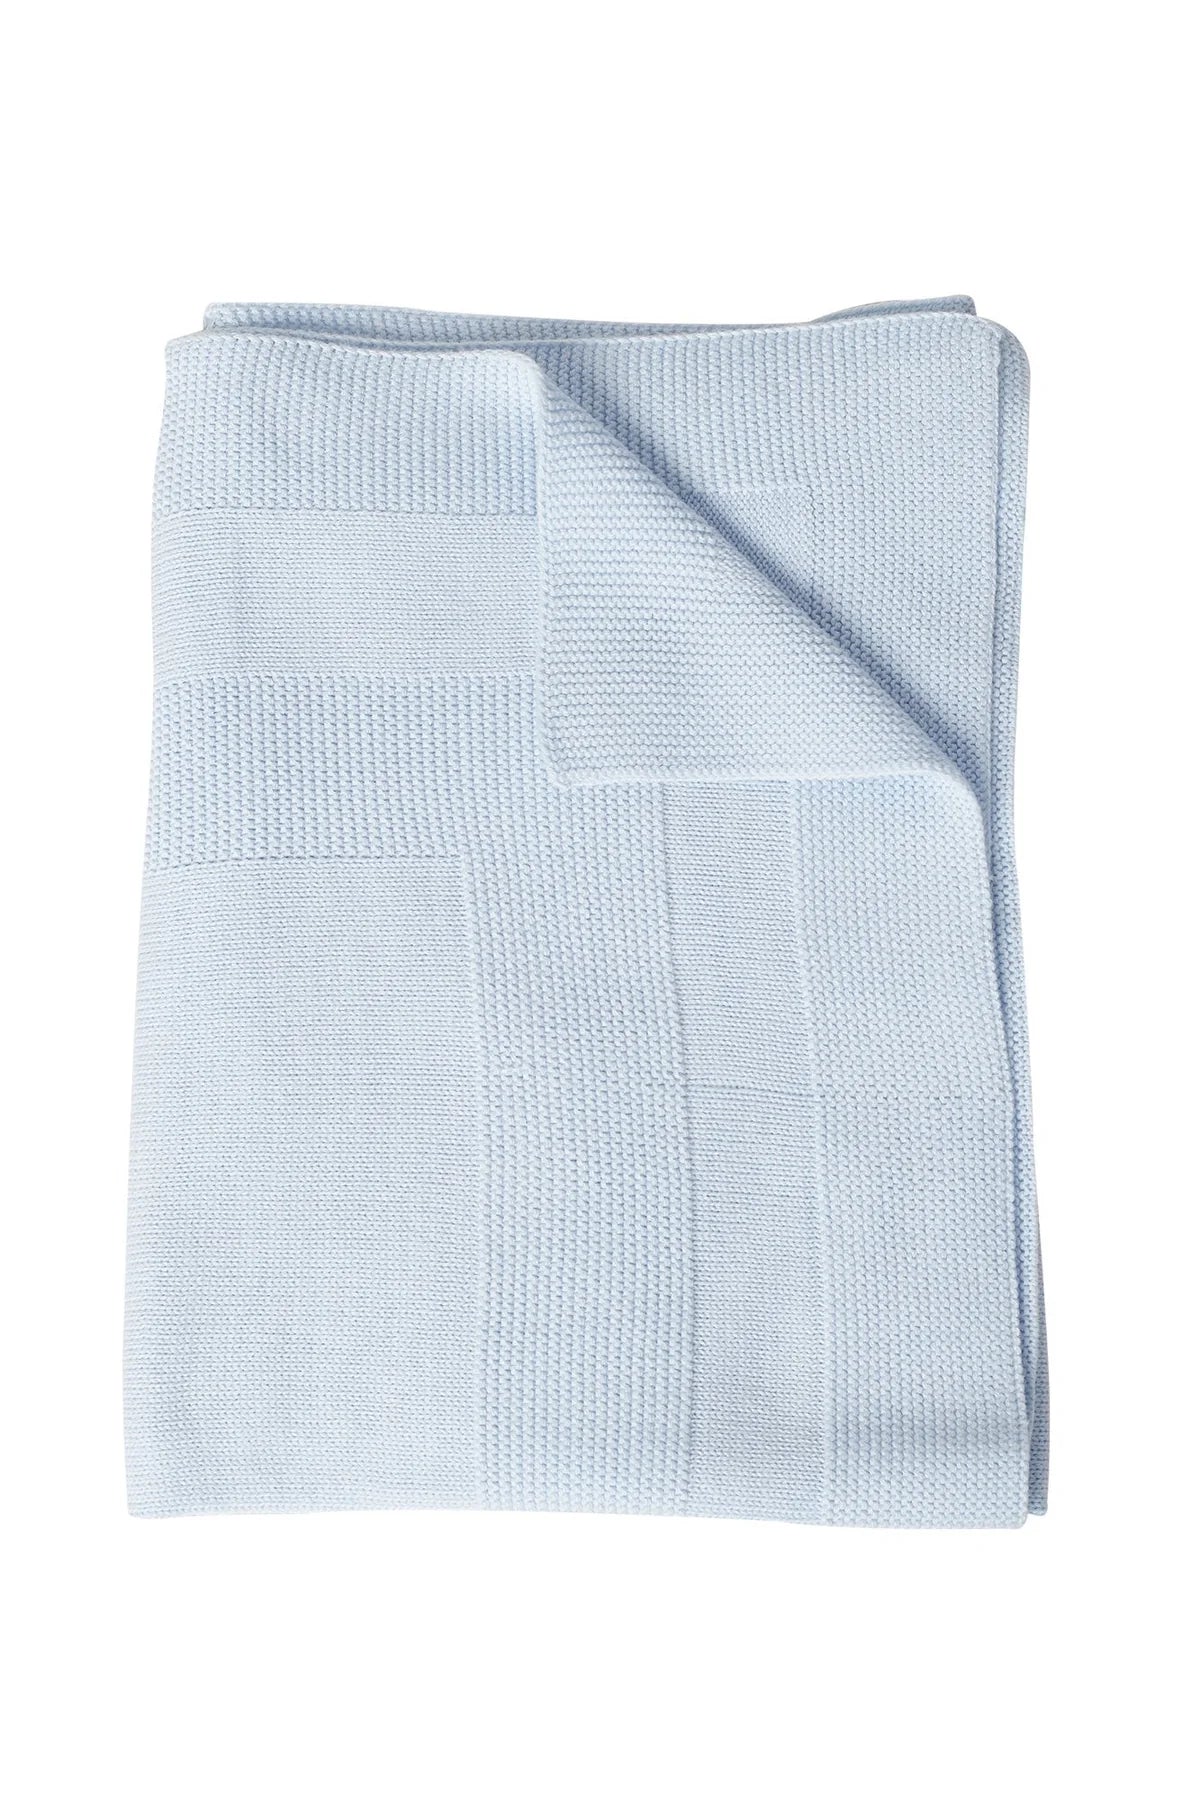 Nella Pima Knit Blanket- Blue